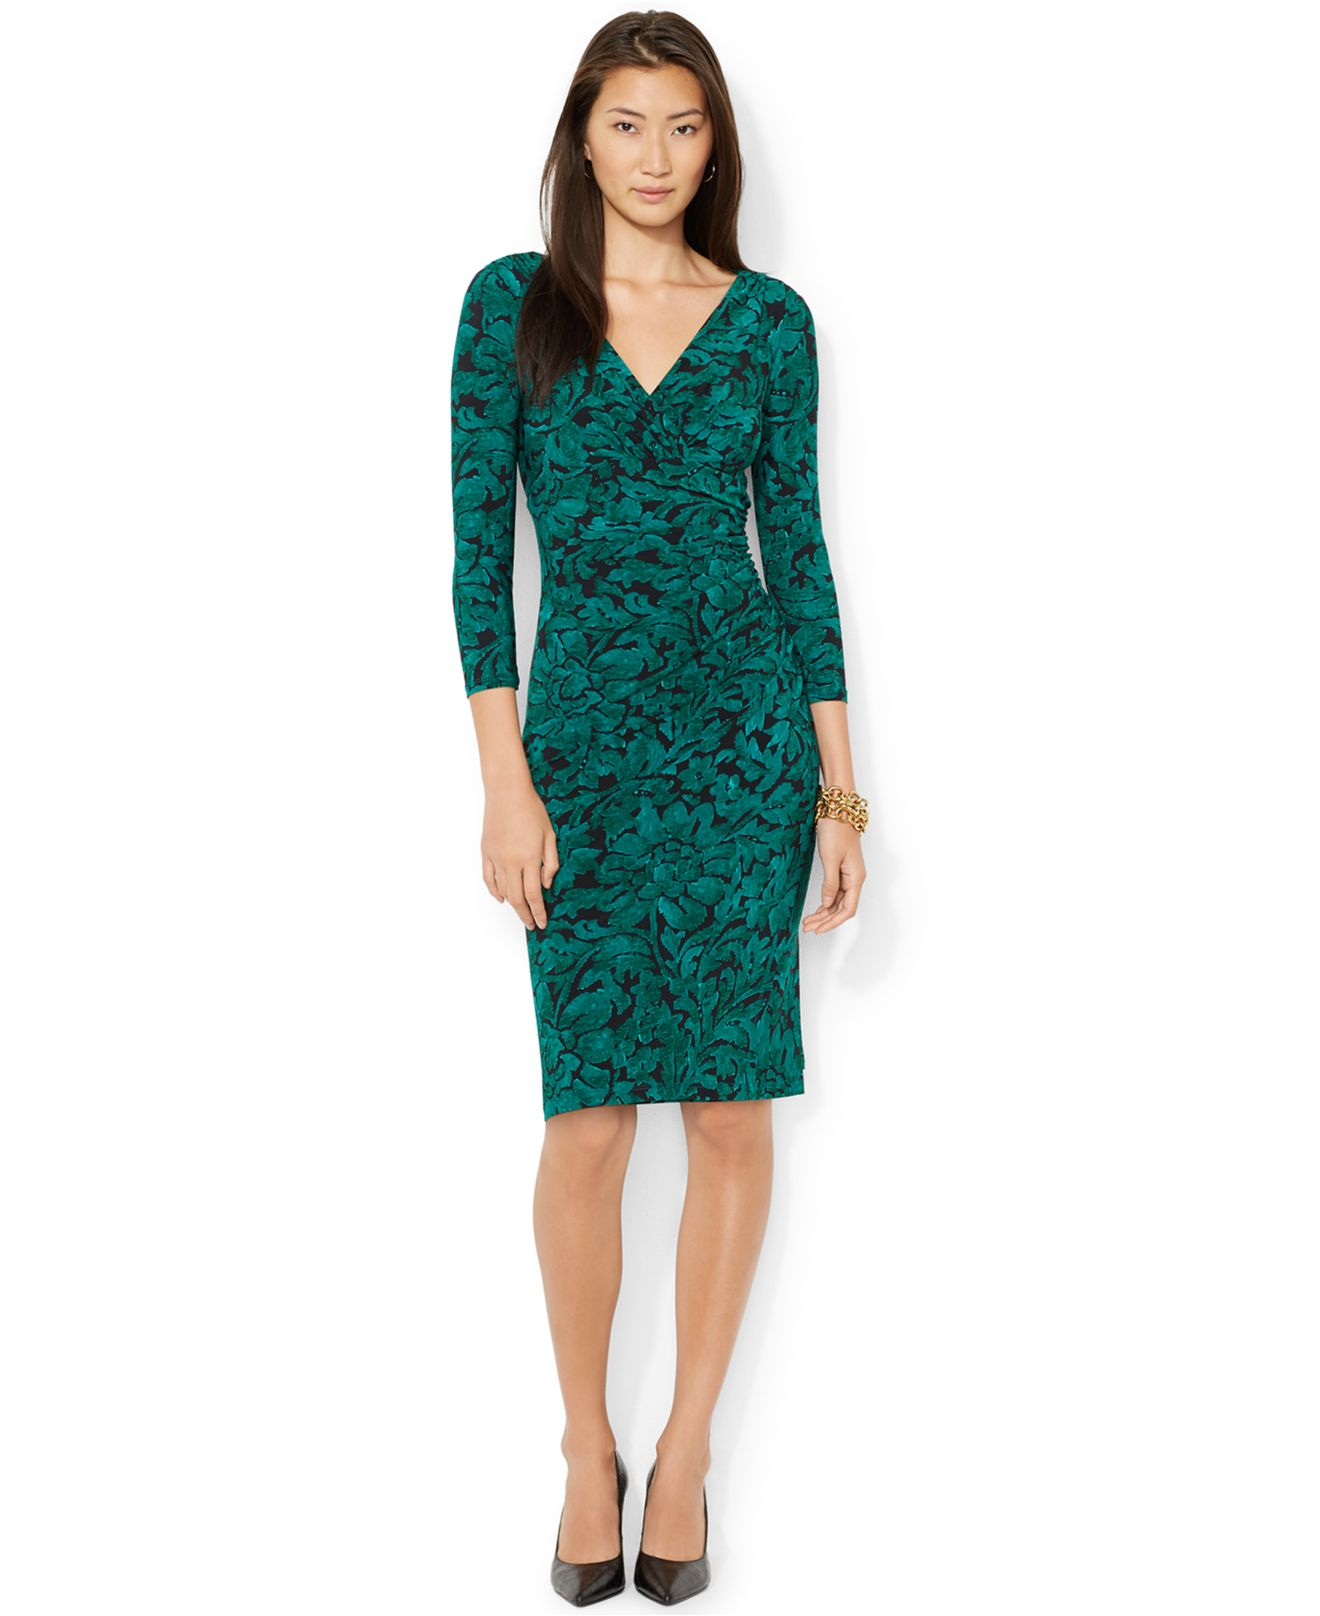 Lauren by Ralph Lauren Floral-Print Faux-Wrap Dress in Green | Lyst